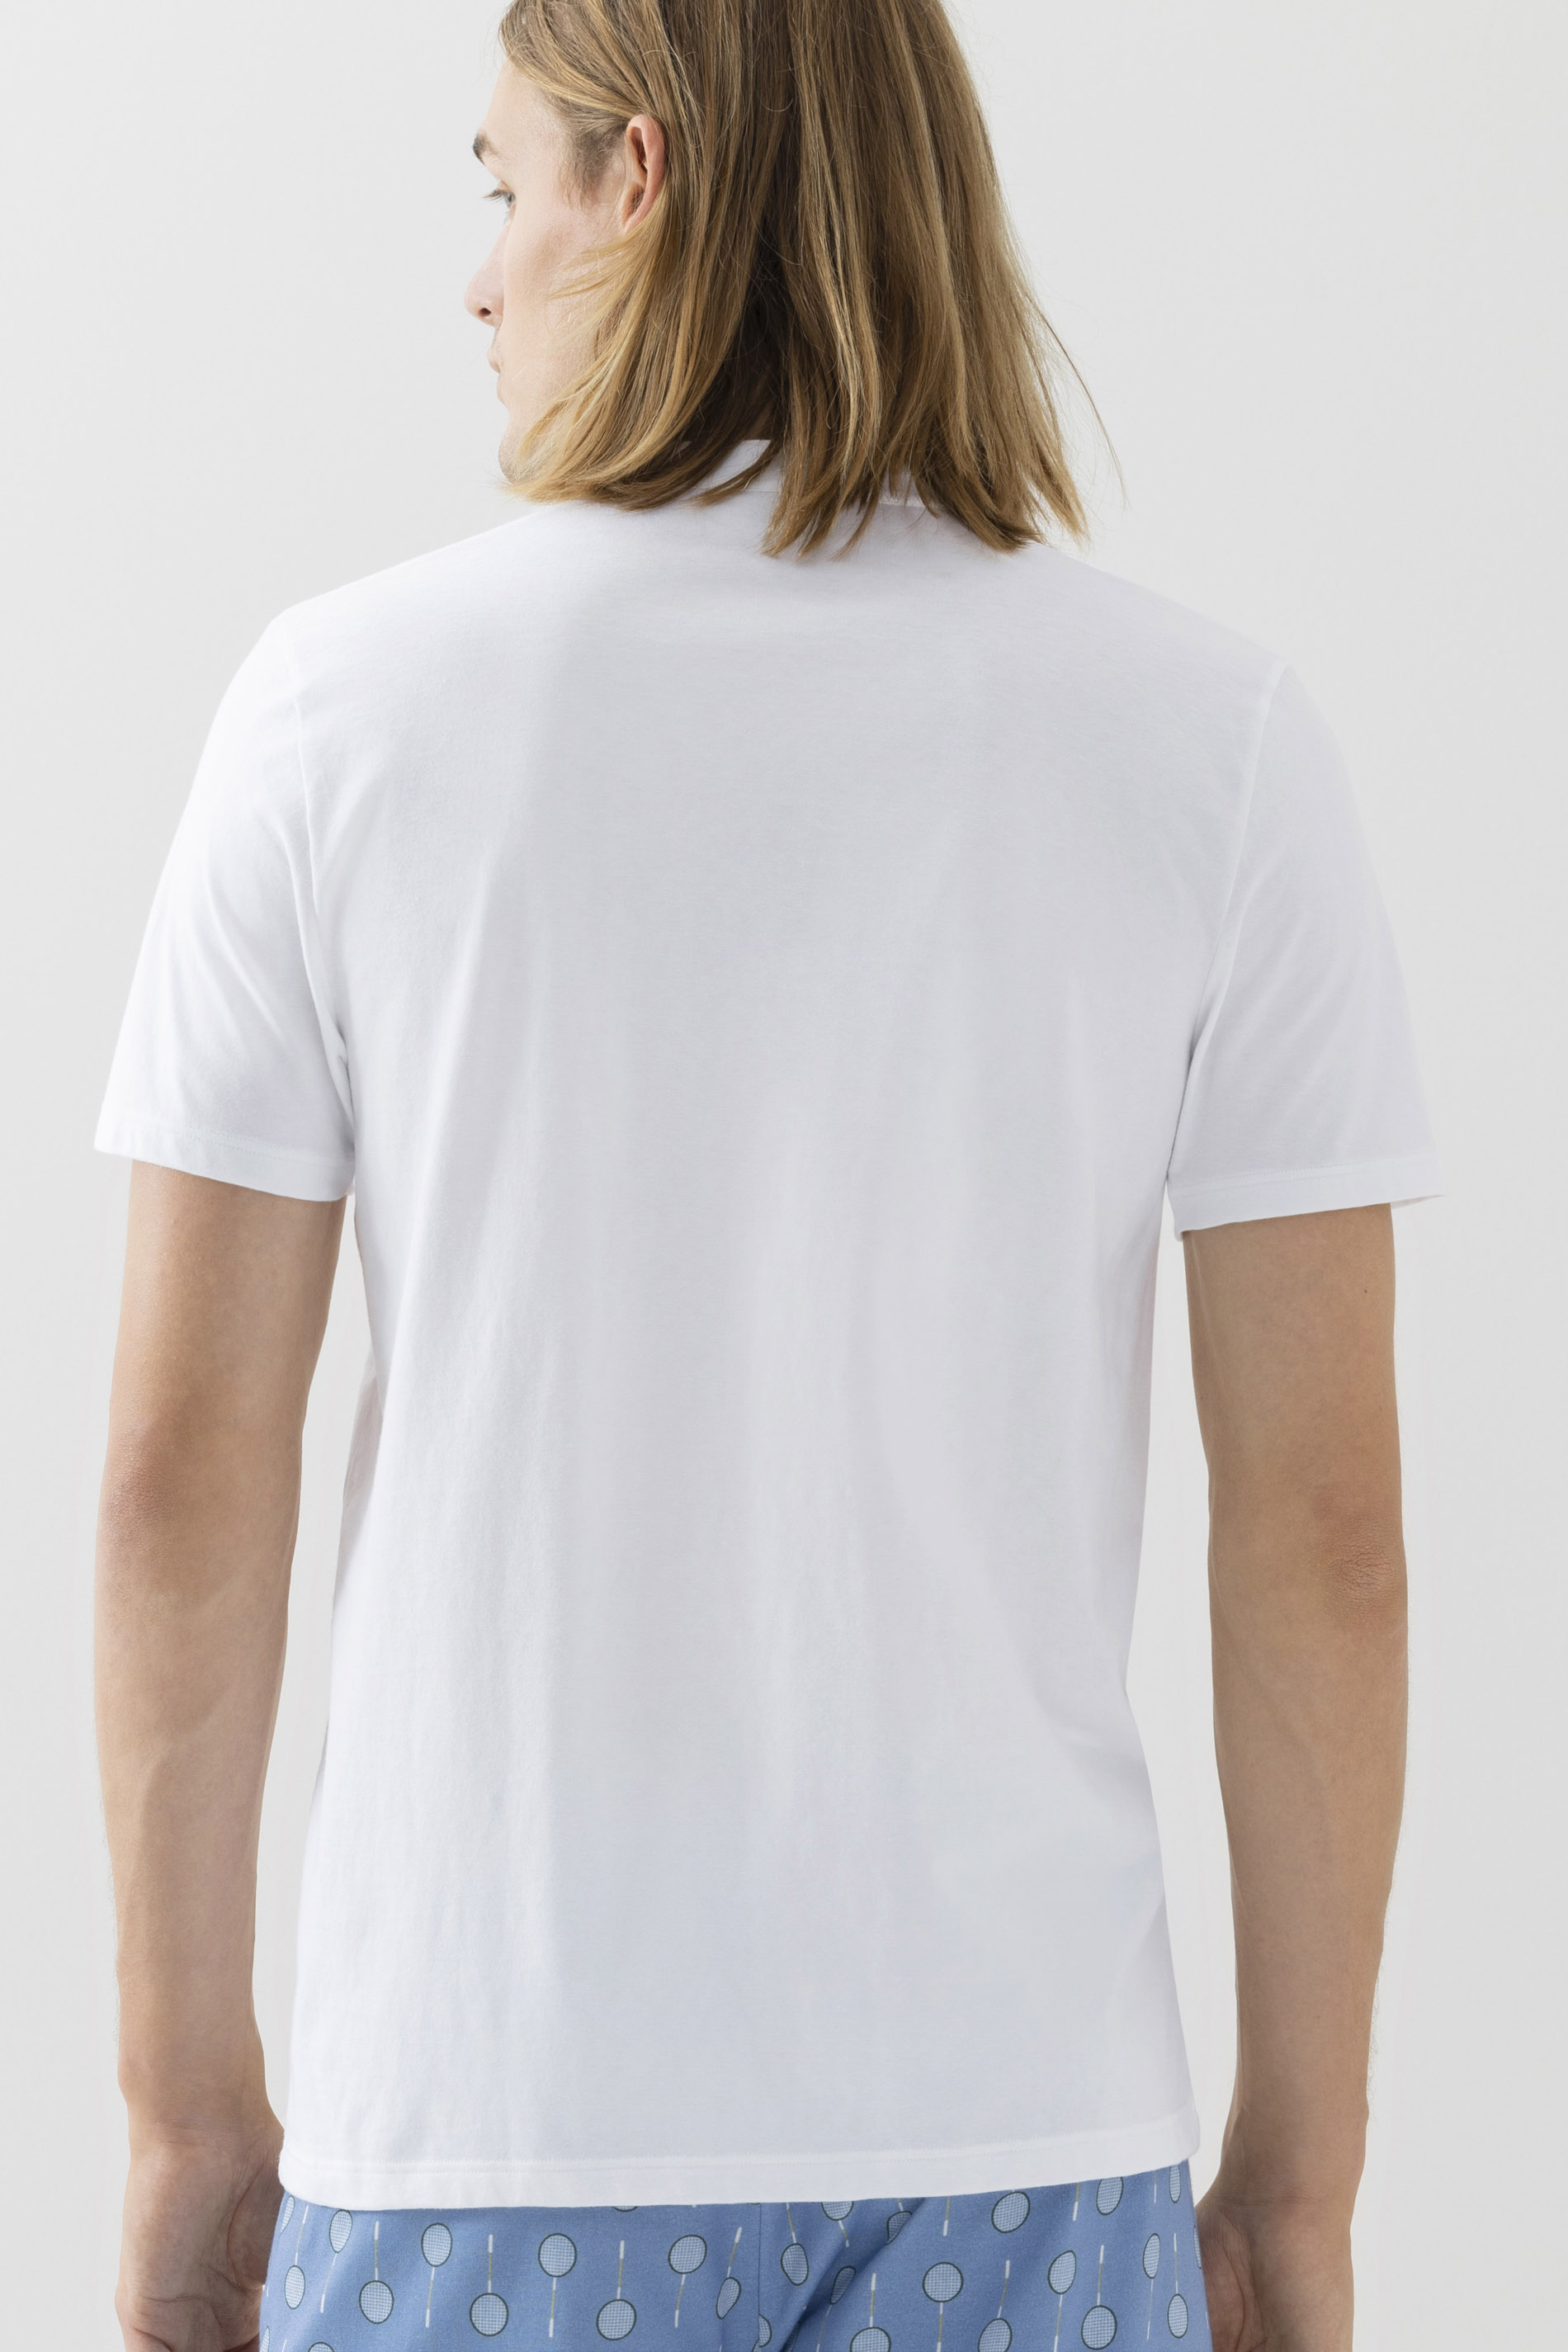 Shirt Serie Ringwood Colour Rear View | mey®